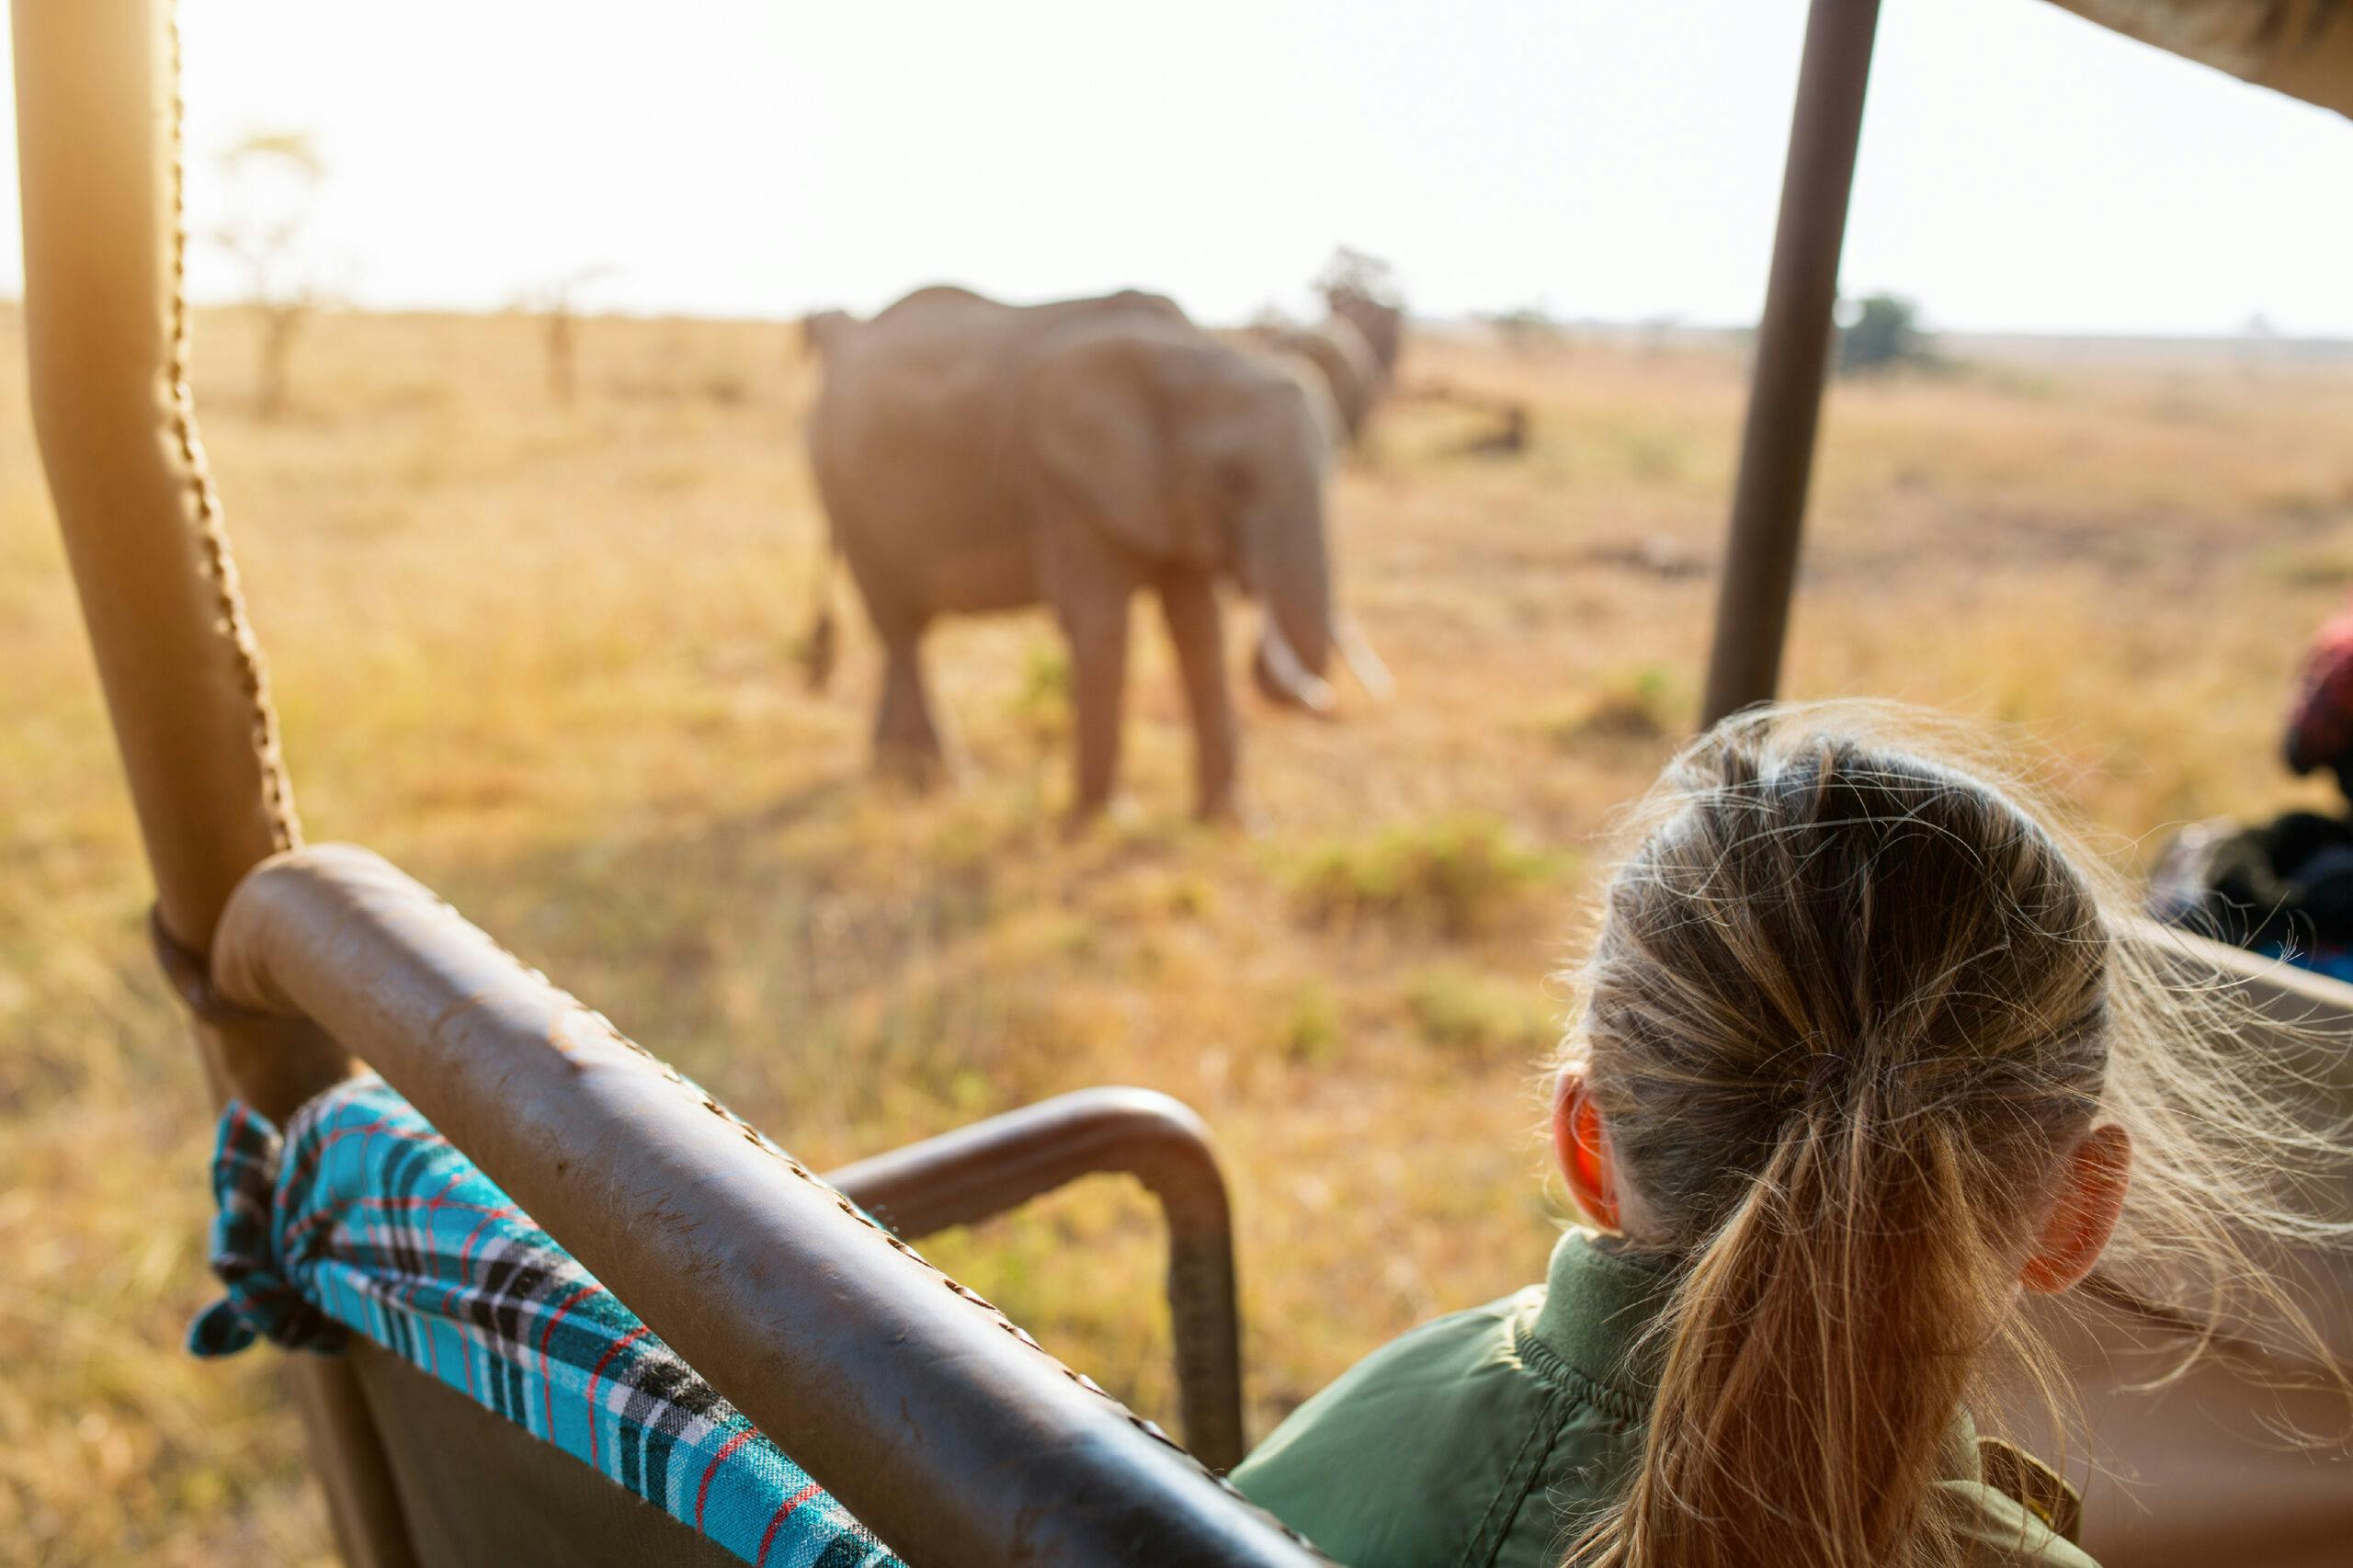 Adorable little girl in Kenya safari on morning game drive in open vehicle in a luxury safari adventure tour in Africa